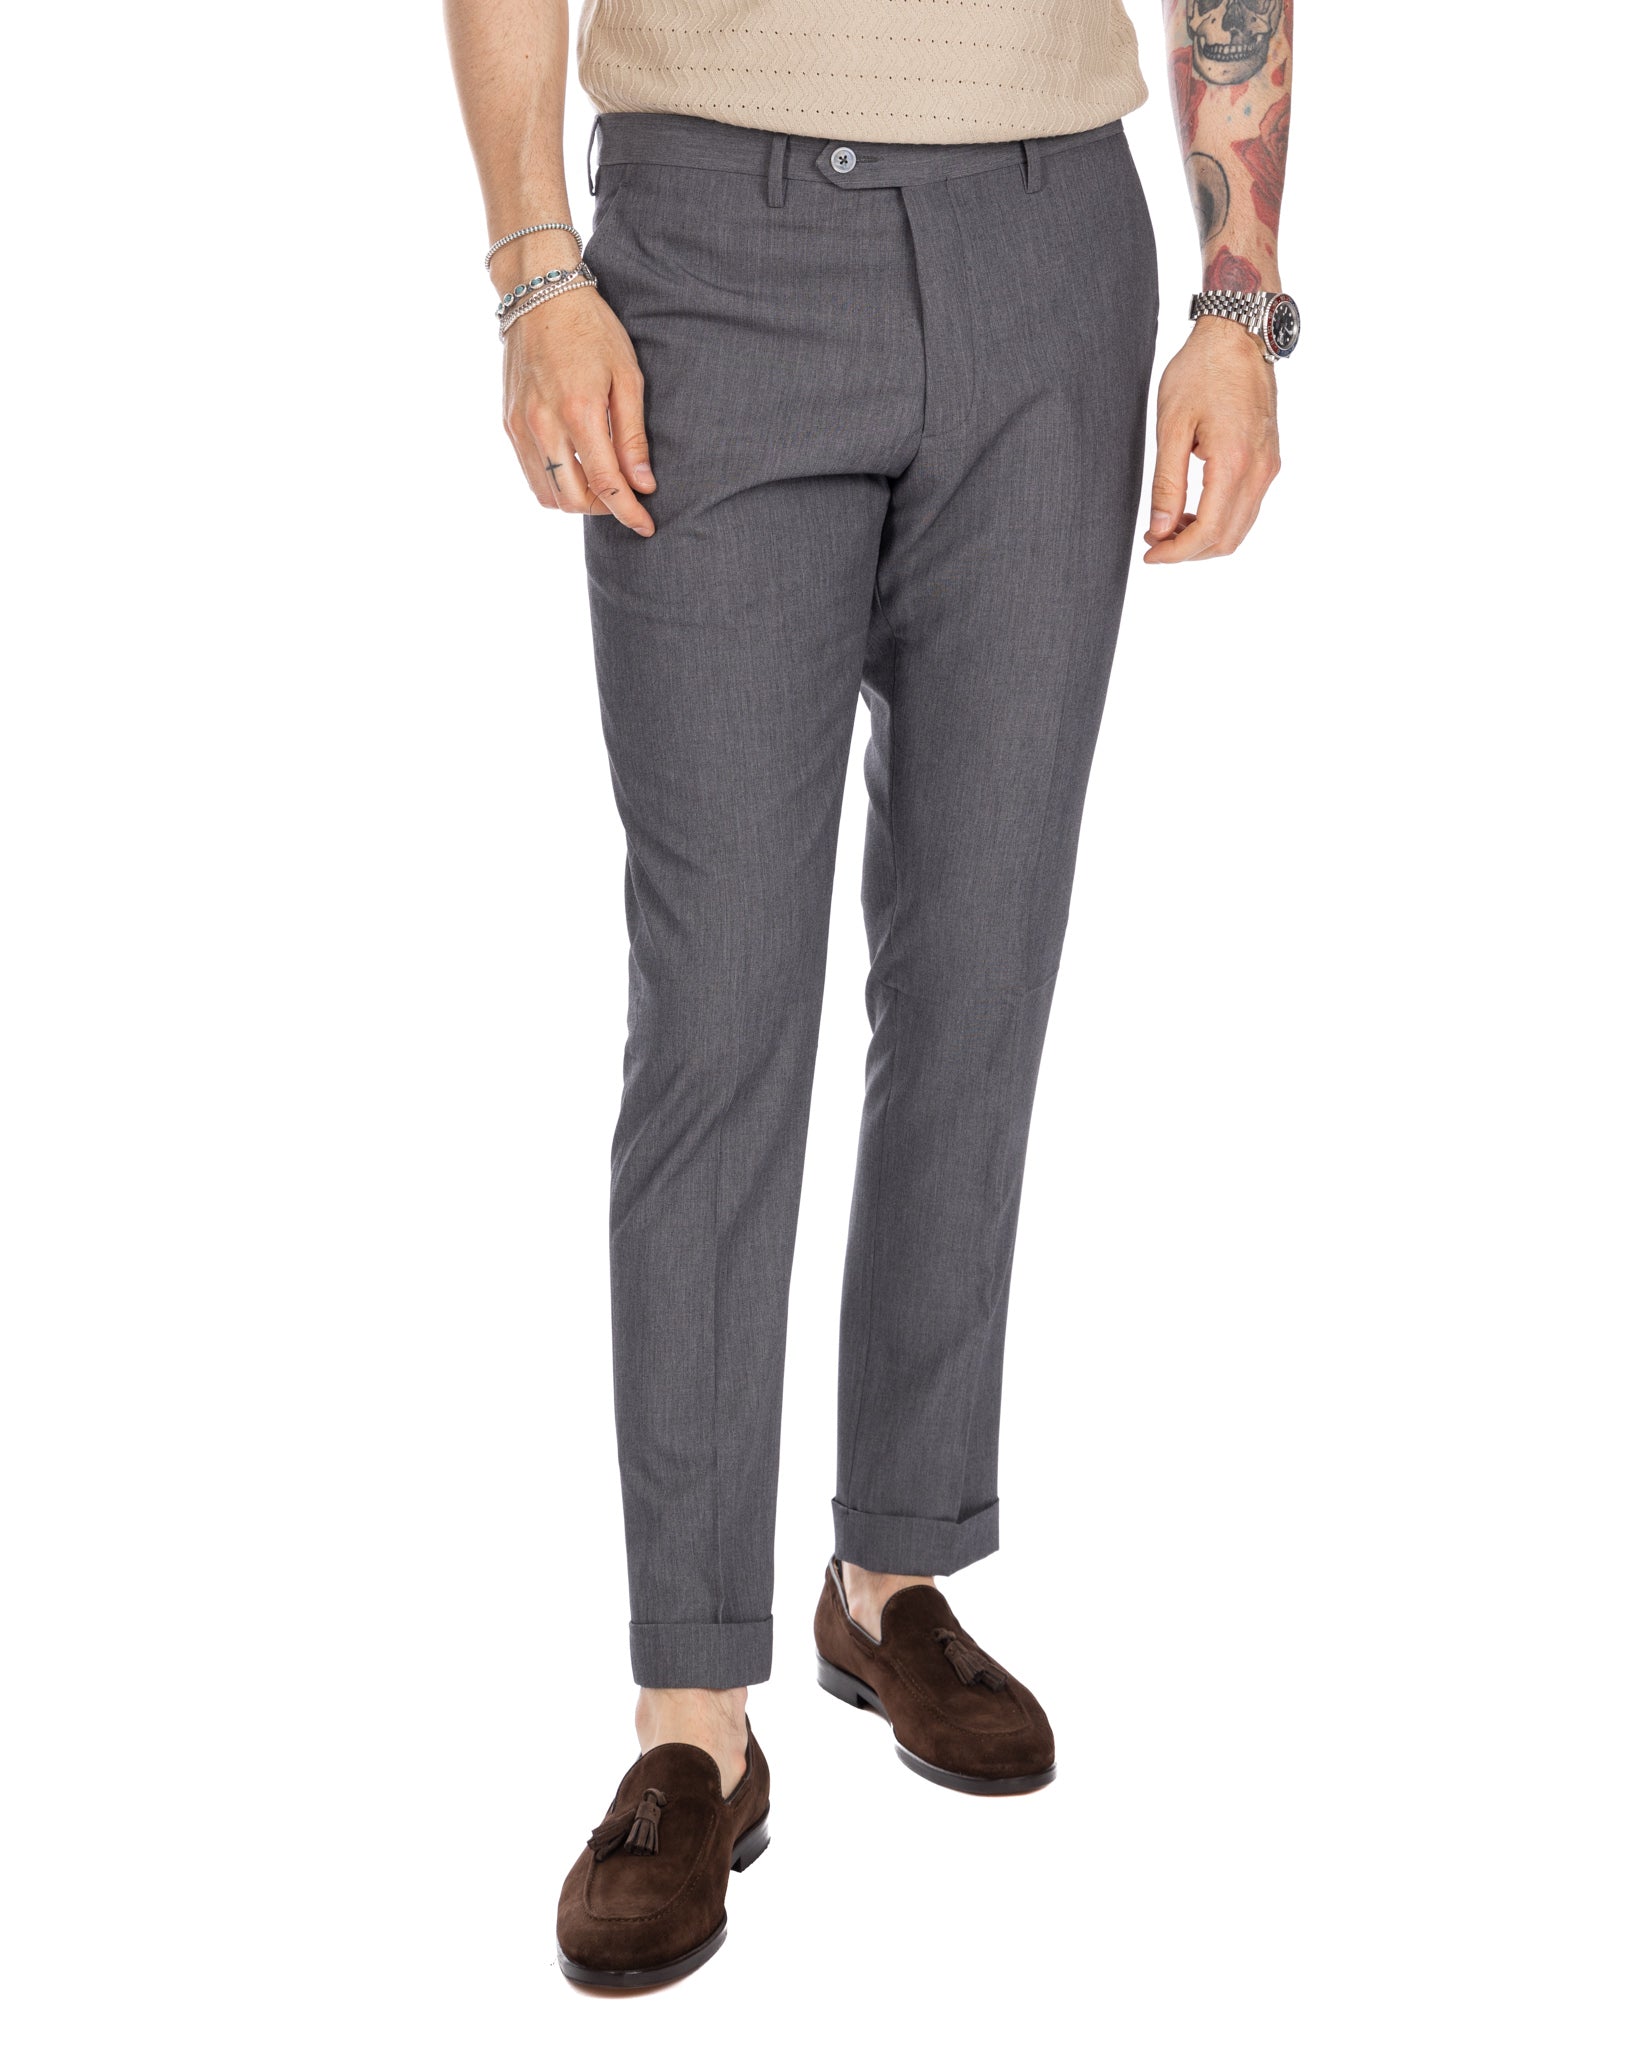 Brema - gray basic trousers